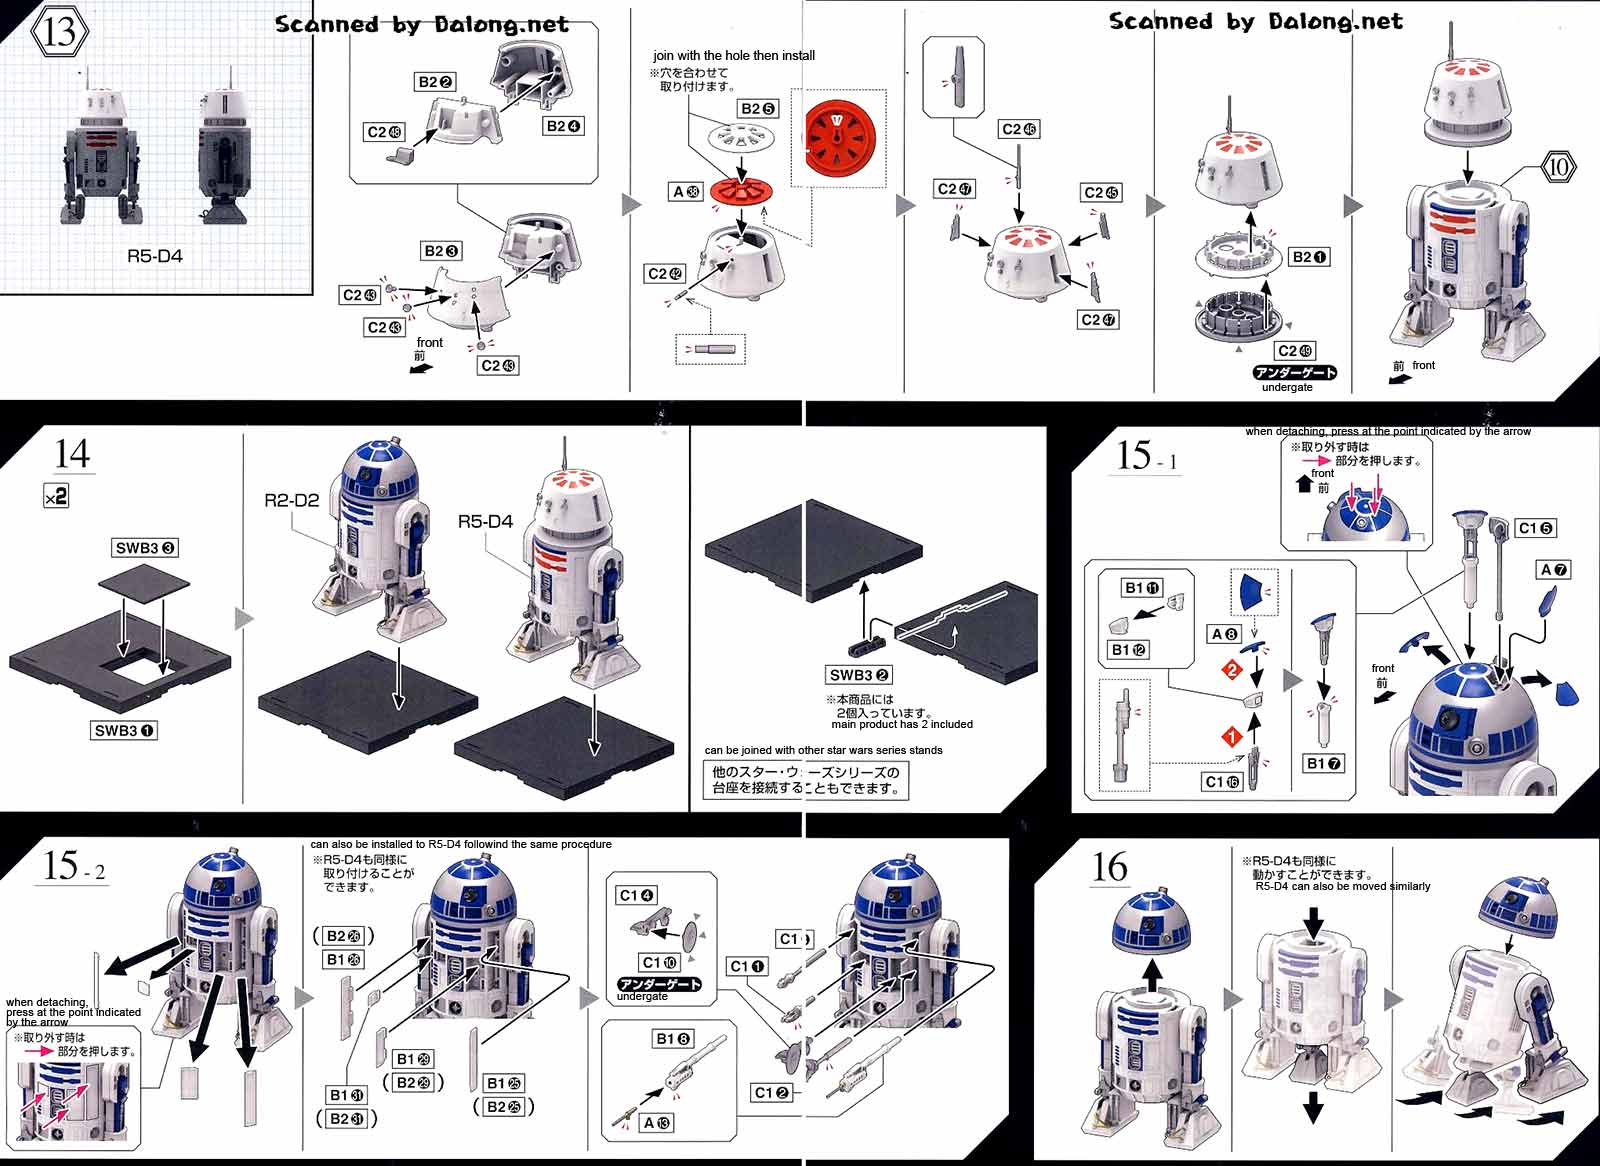 Bandai 1/12 R2-D2 & R5-D4 English Manual & Color Guide - Mech9.com